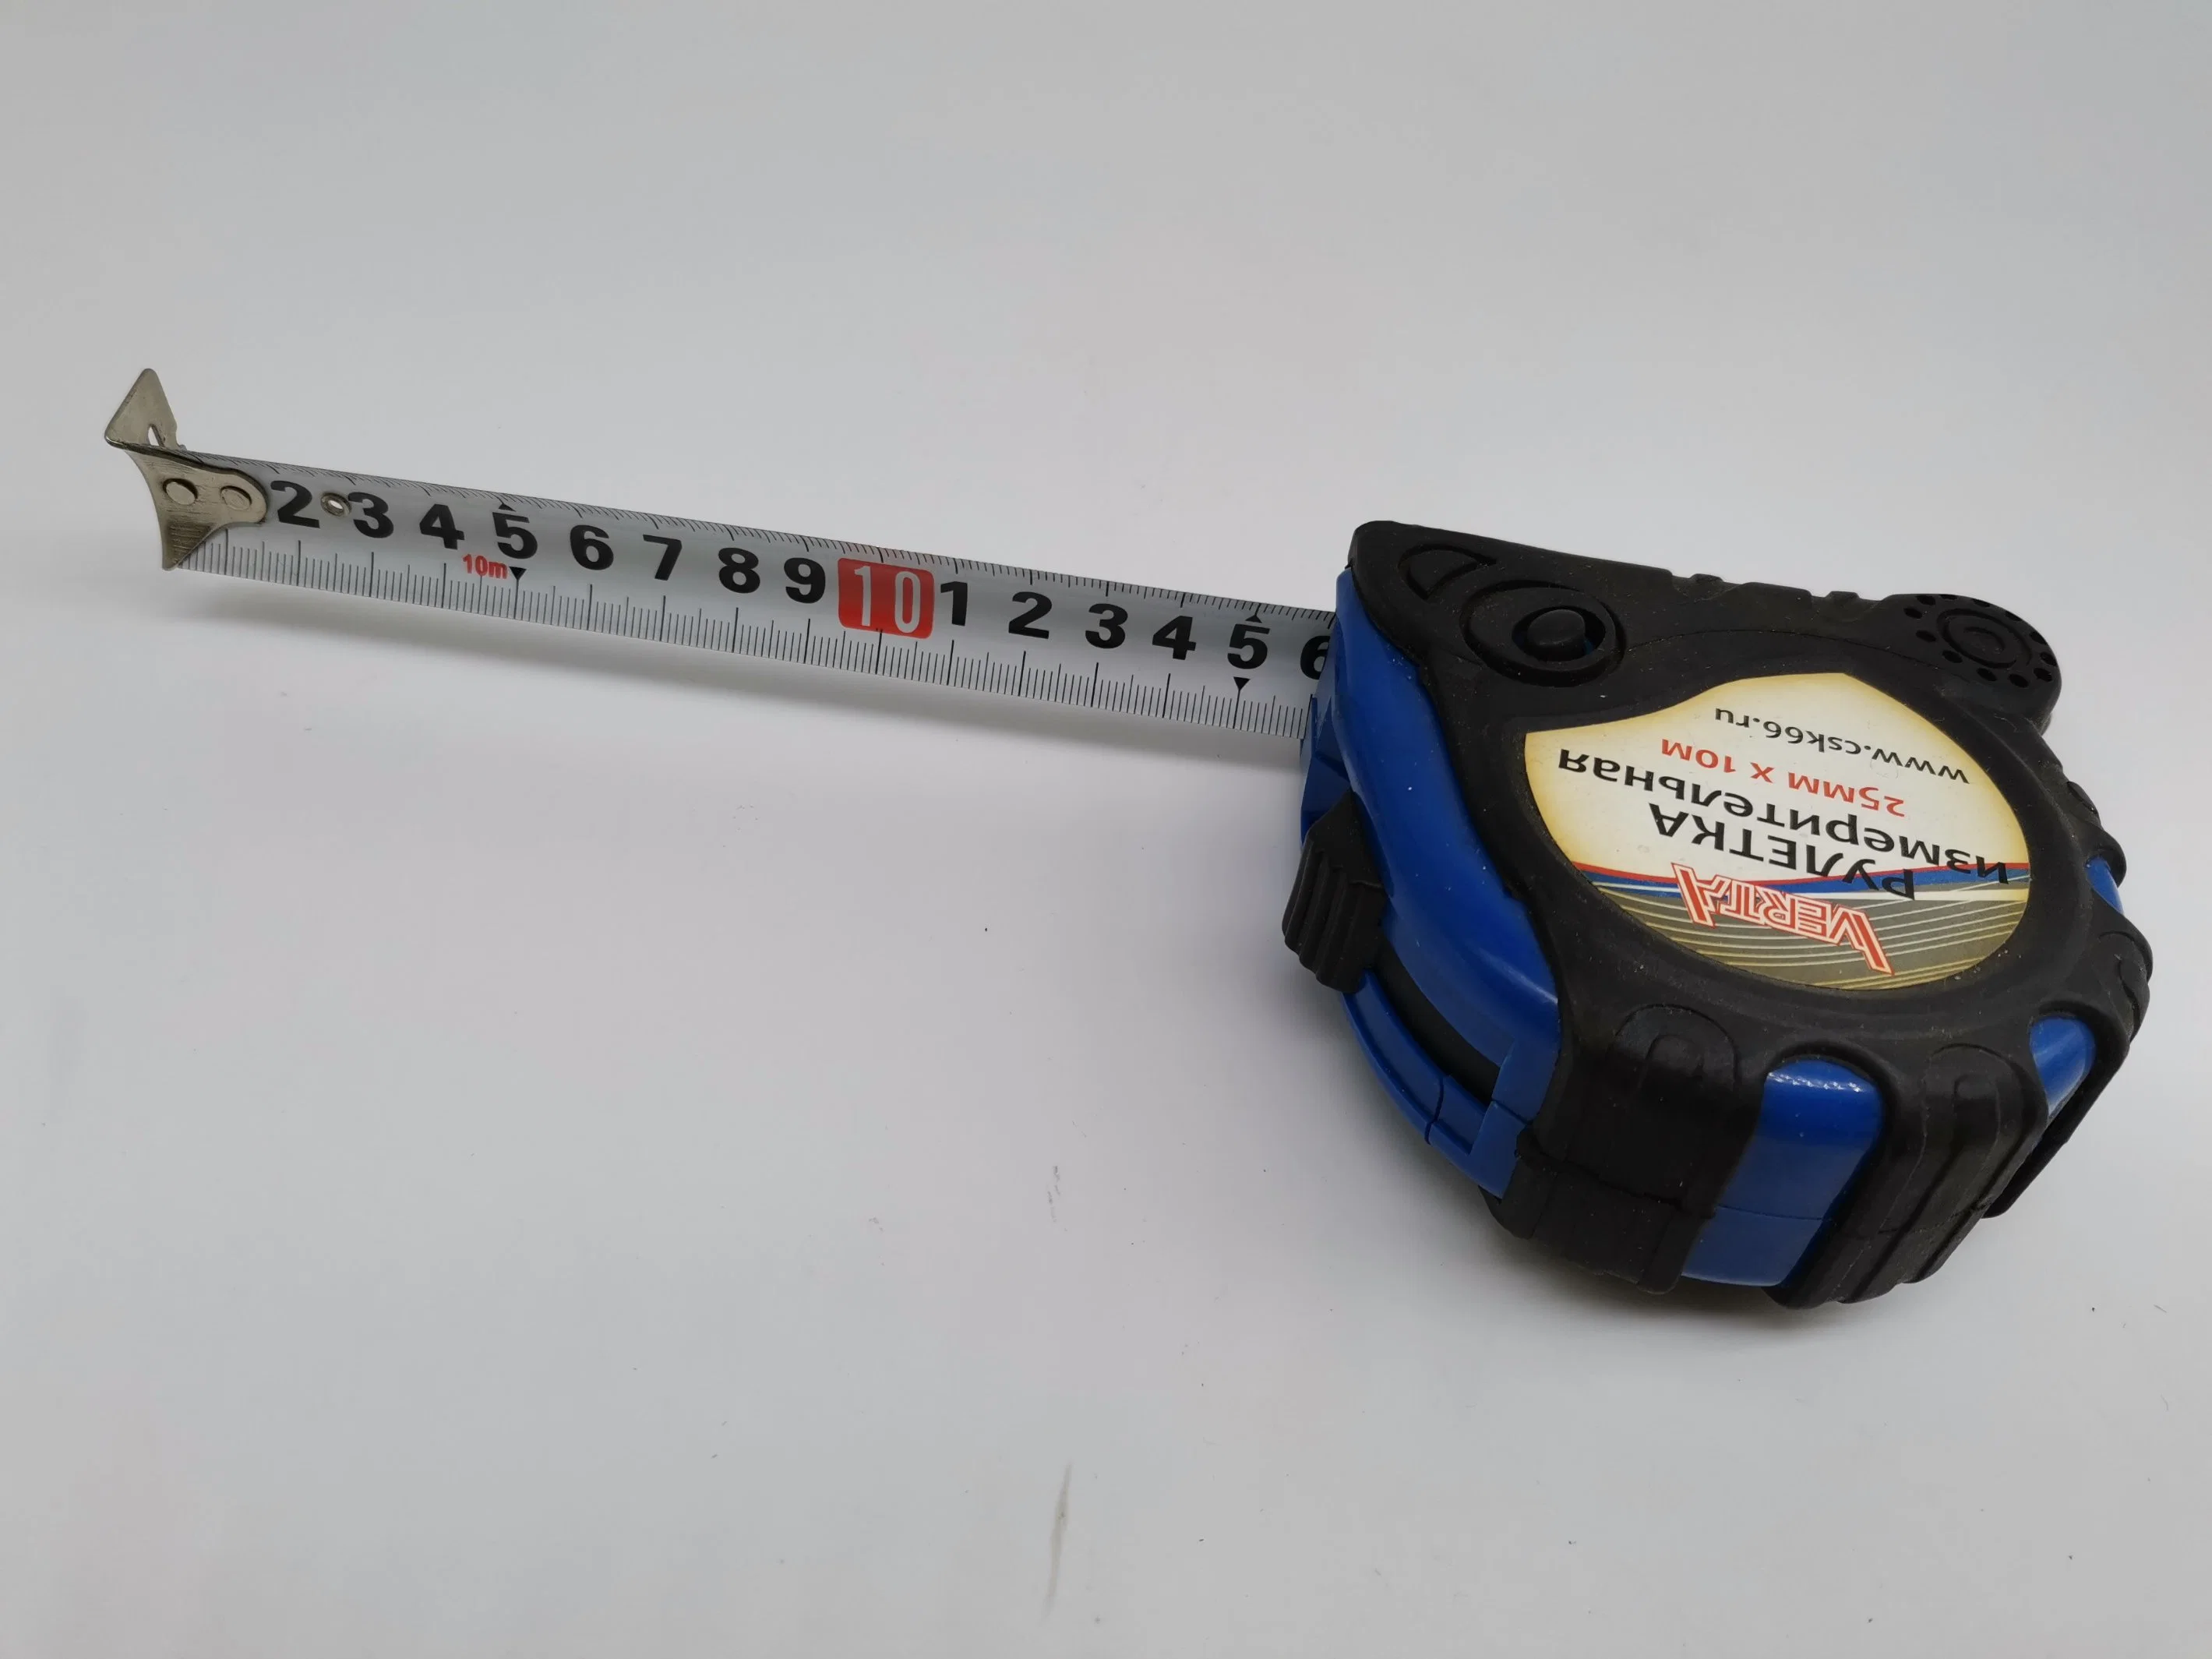 Fiberglass Measure Tape Construction Tools World-Class Steel Tape/Measuring Tape